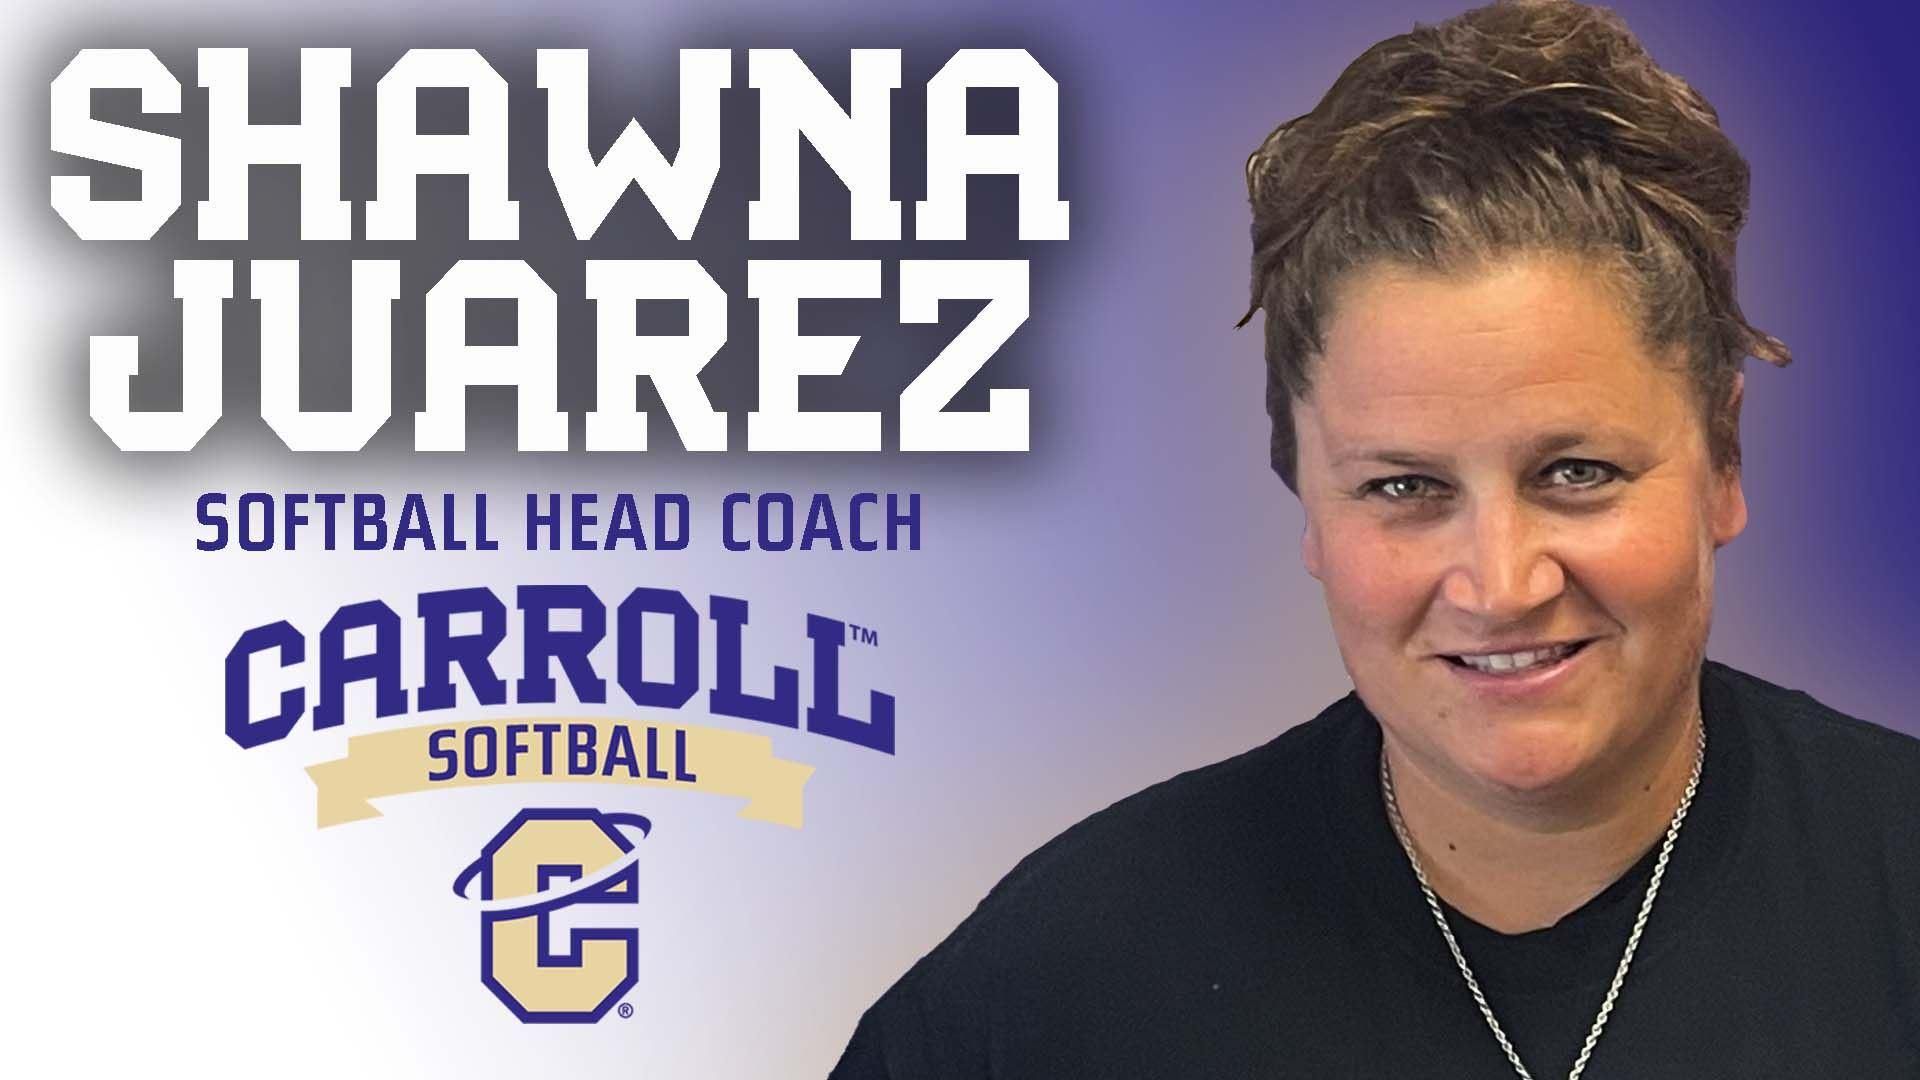 Shawna Juarez - Head Softball Coach